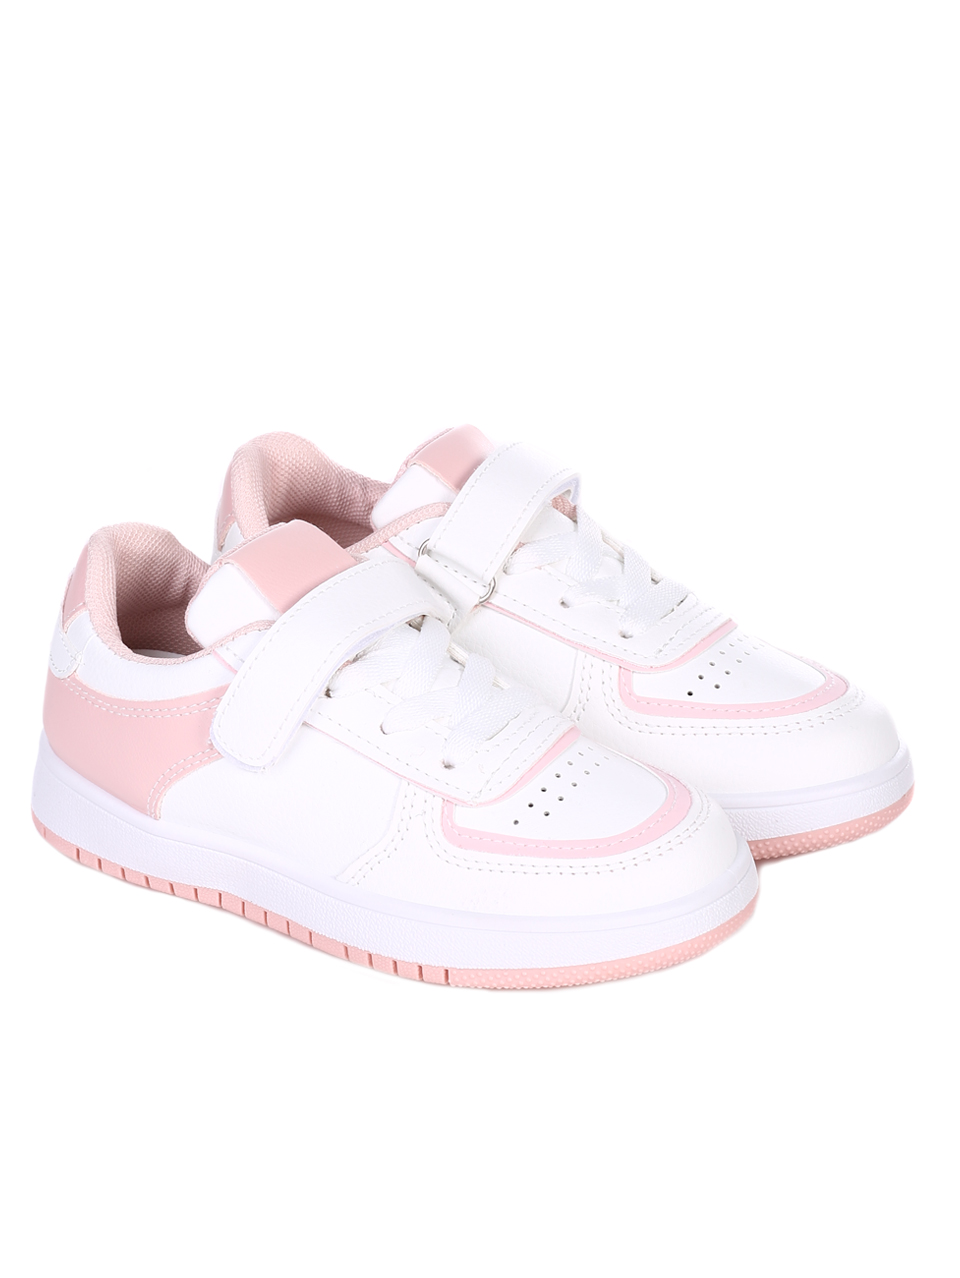 Ежедневни детски обувки в бяло и розово 18U-22001 white/pink